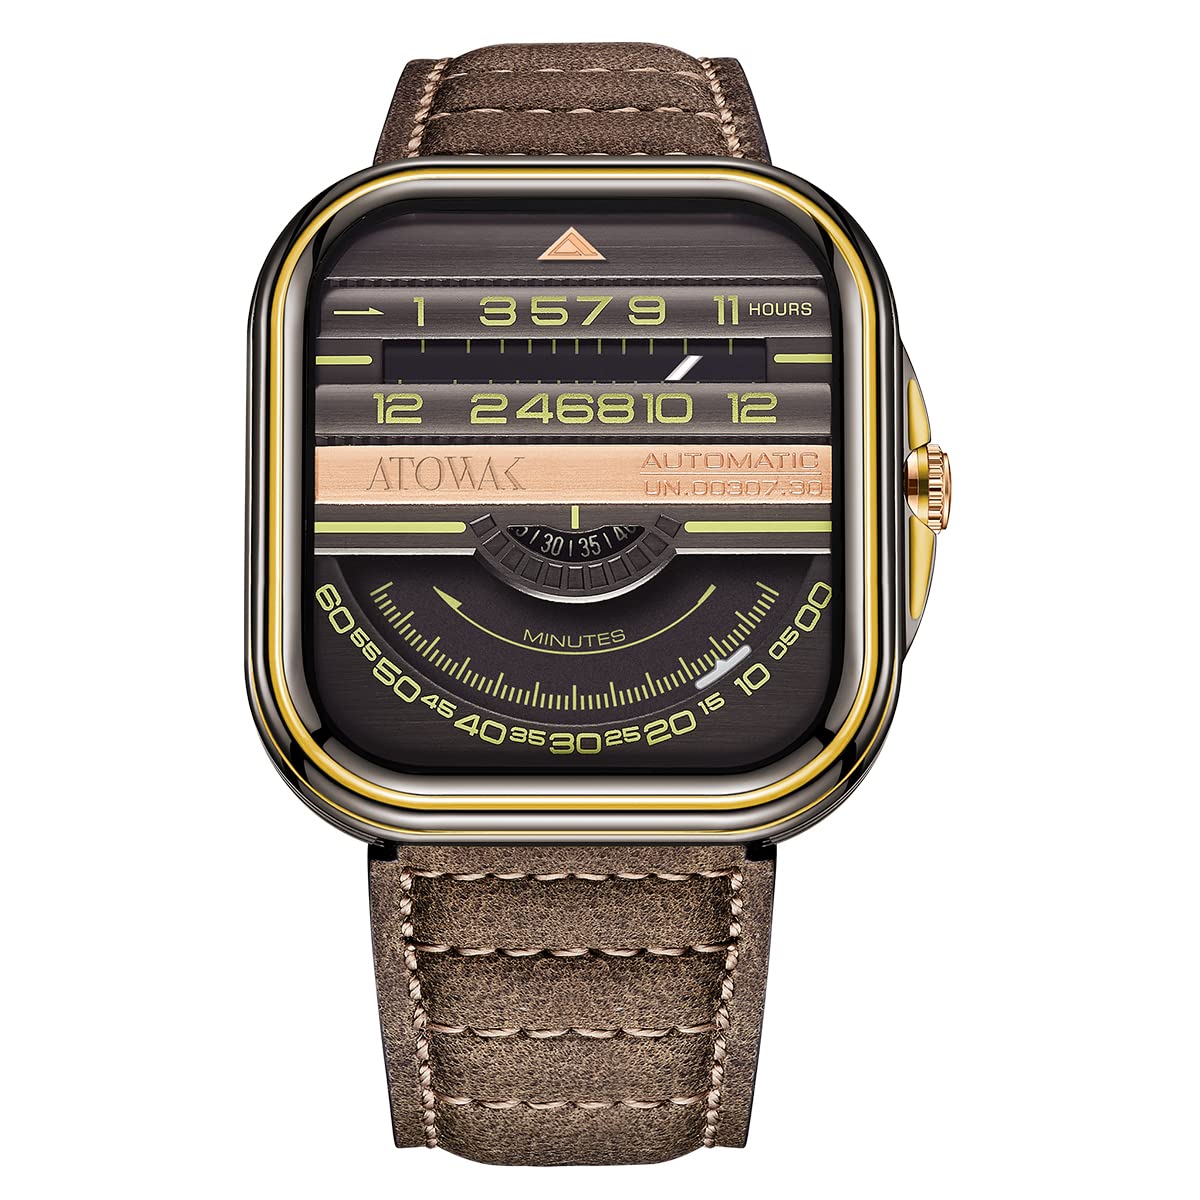 Atowak Windows Pro Series Automatic Mechanical Watch Stainless Steel Analog Sport Square Luxury Watch Reloj with Genuine Leat